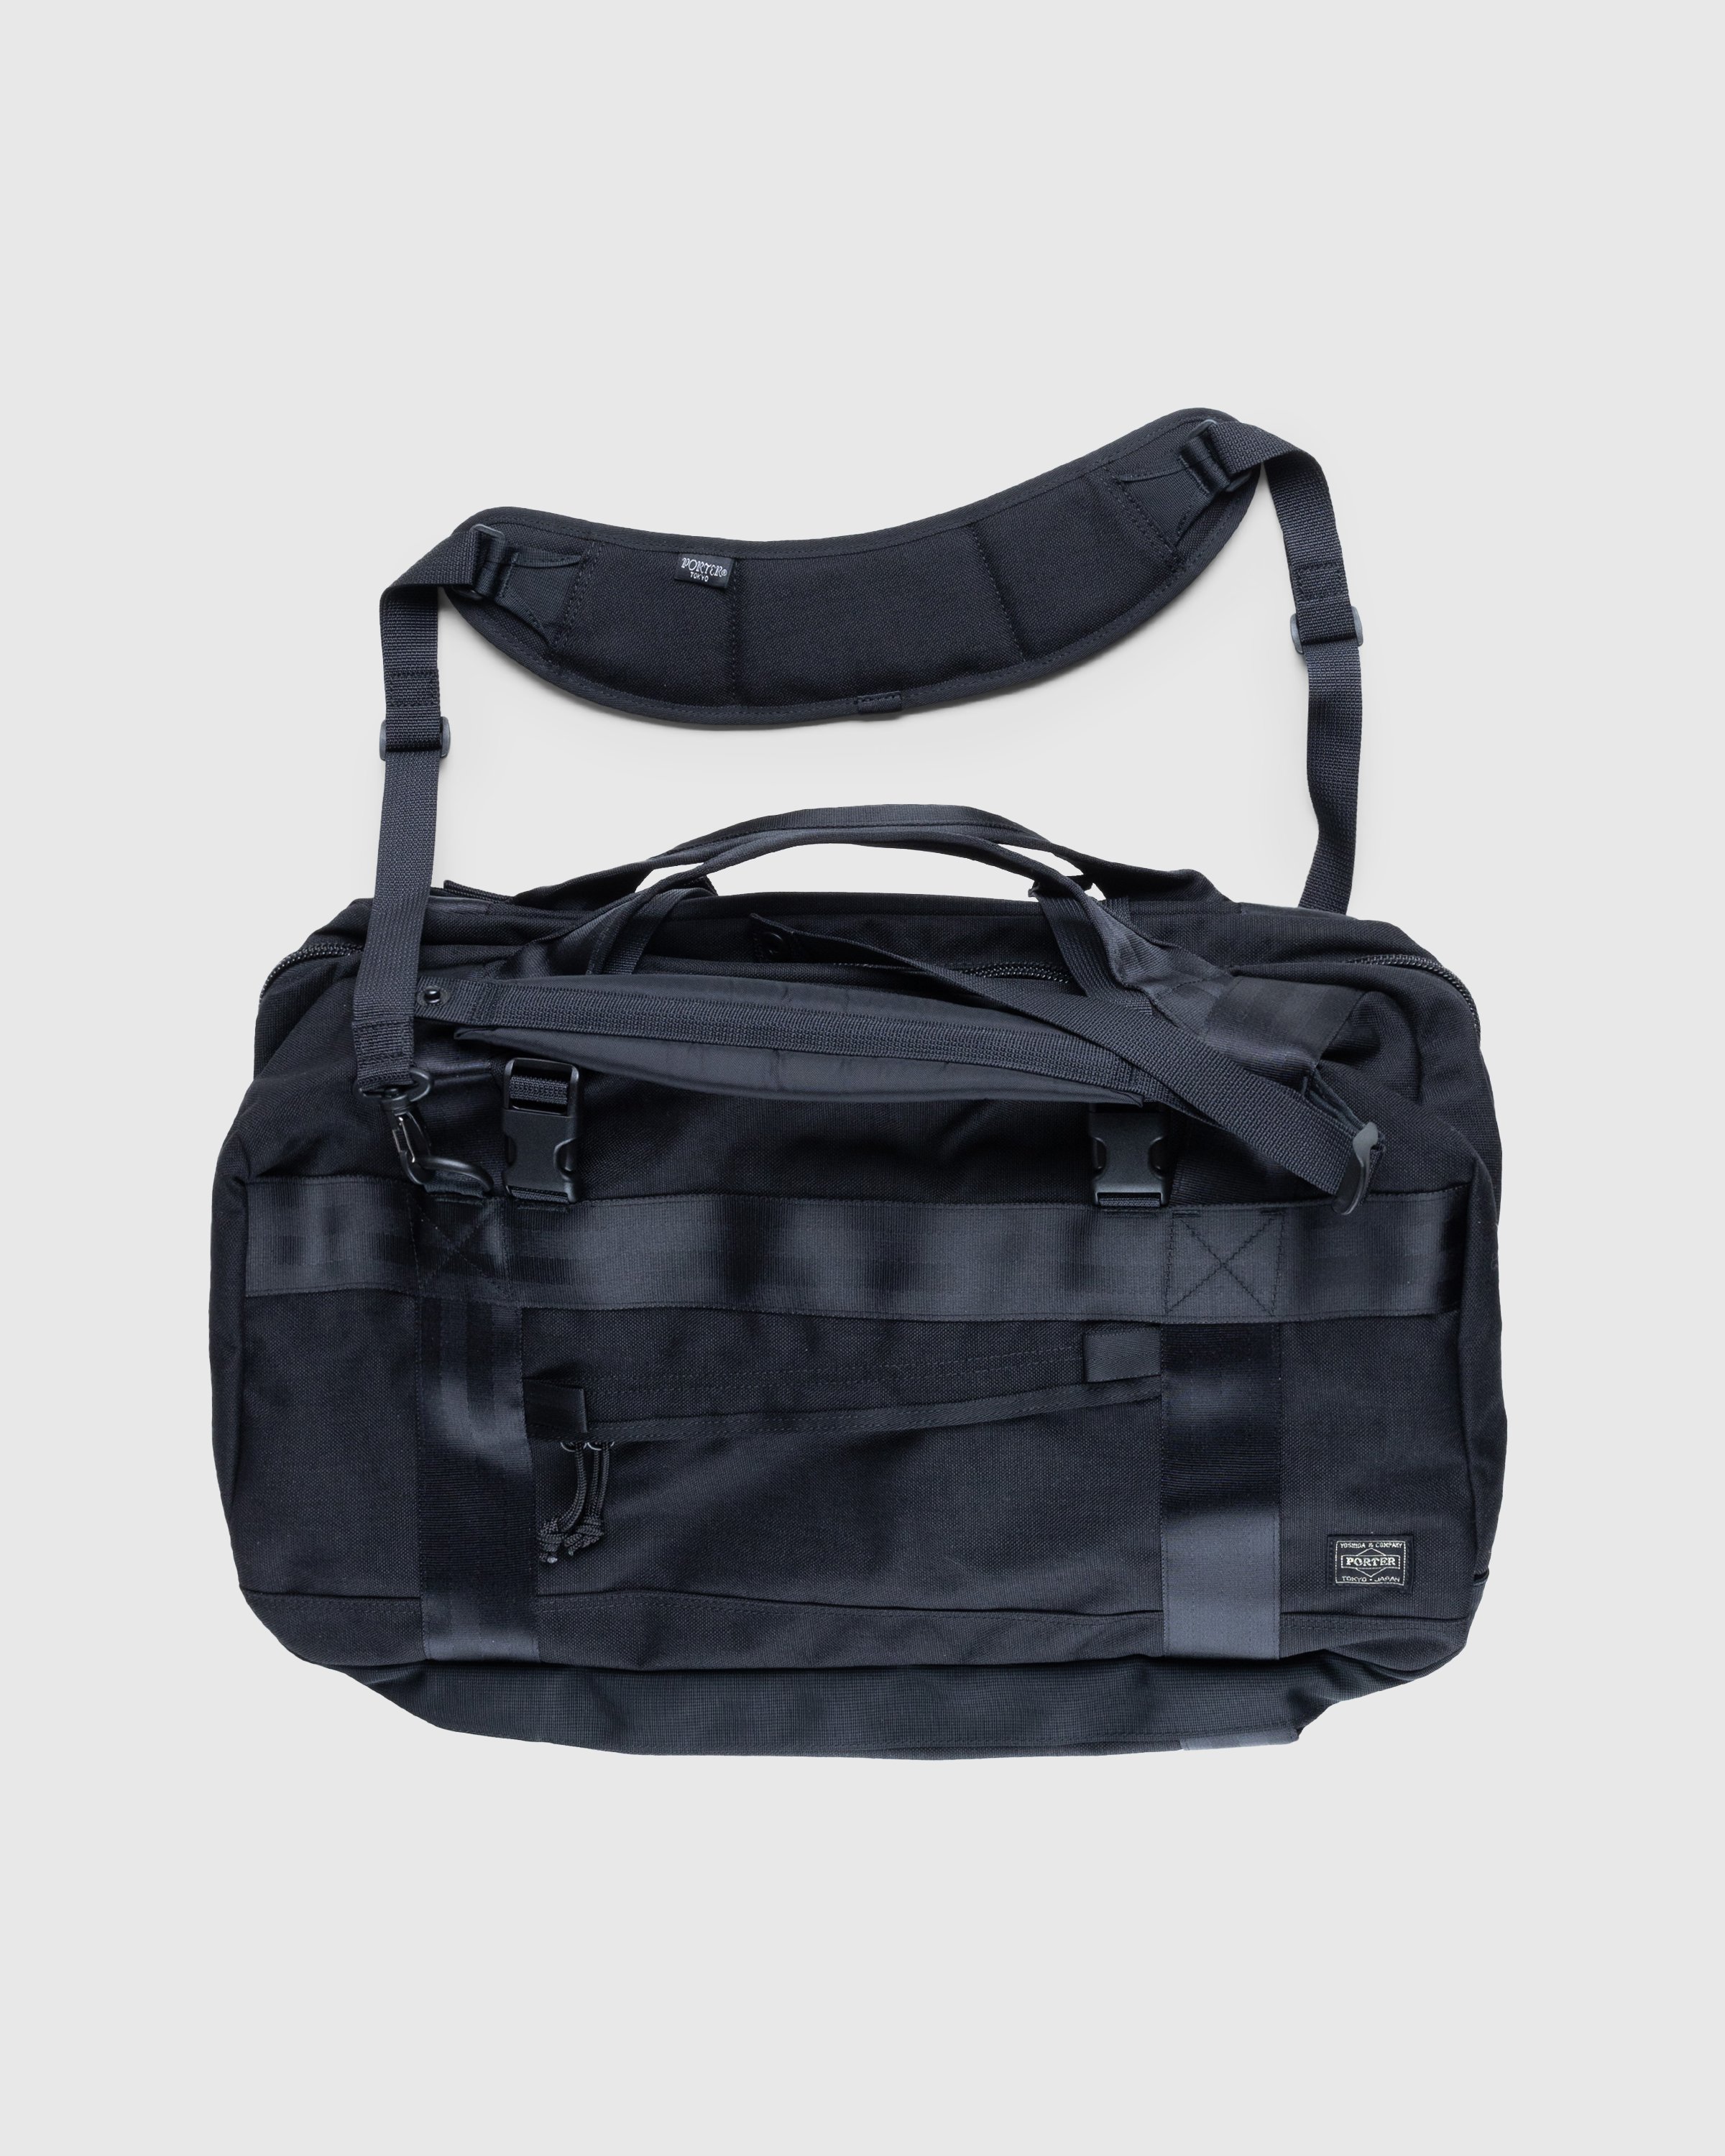 Porter-Yoshida & Co. – Booth Pack 3-Way Duffle Bag Black | Highsnobiety Shop